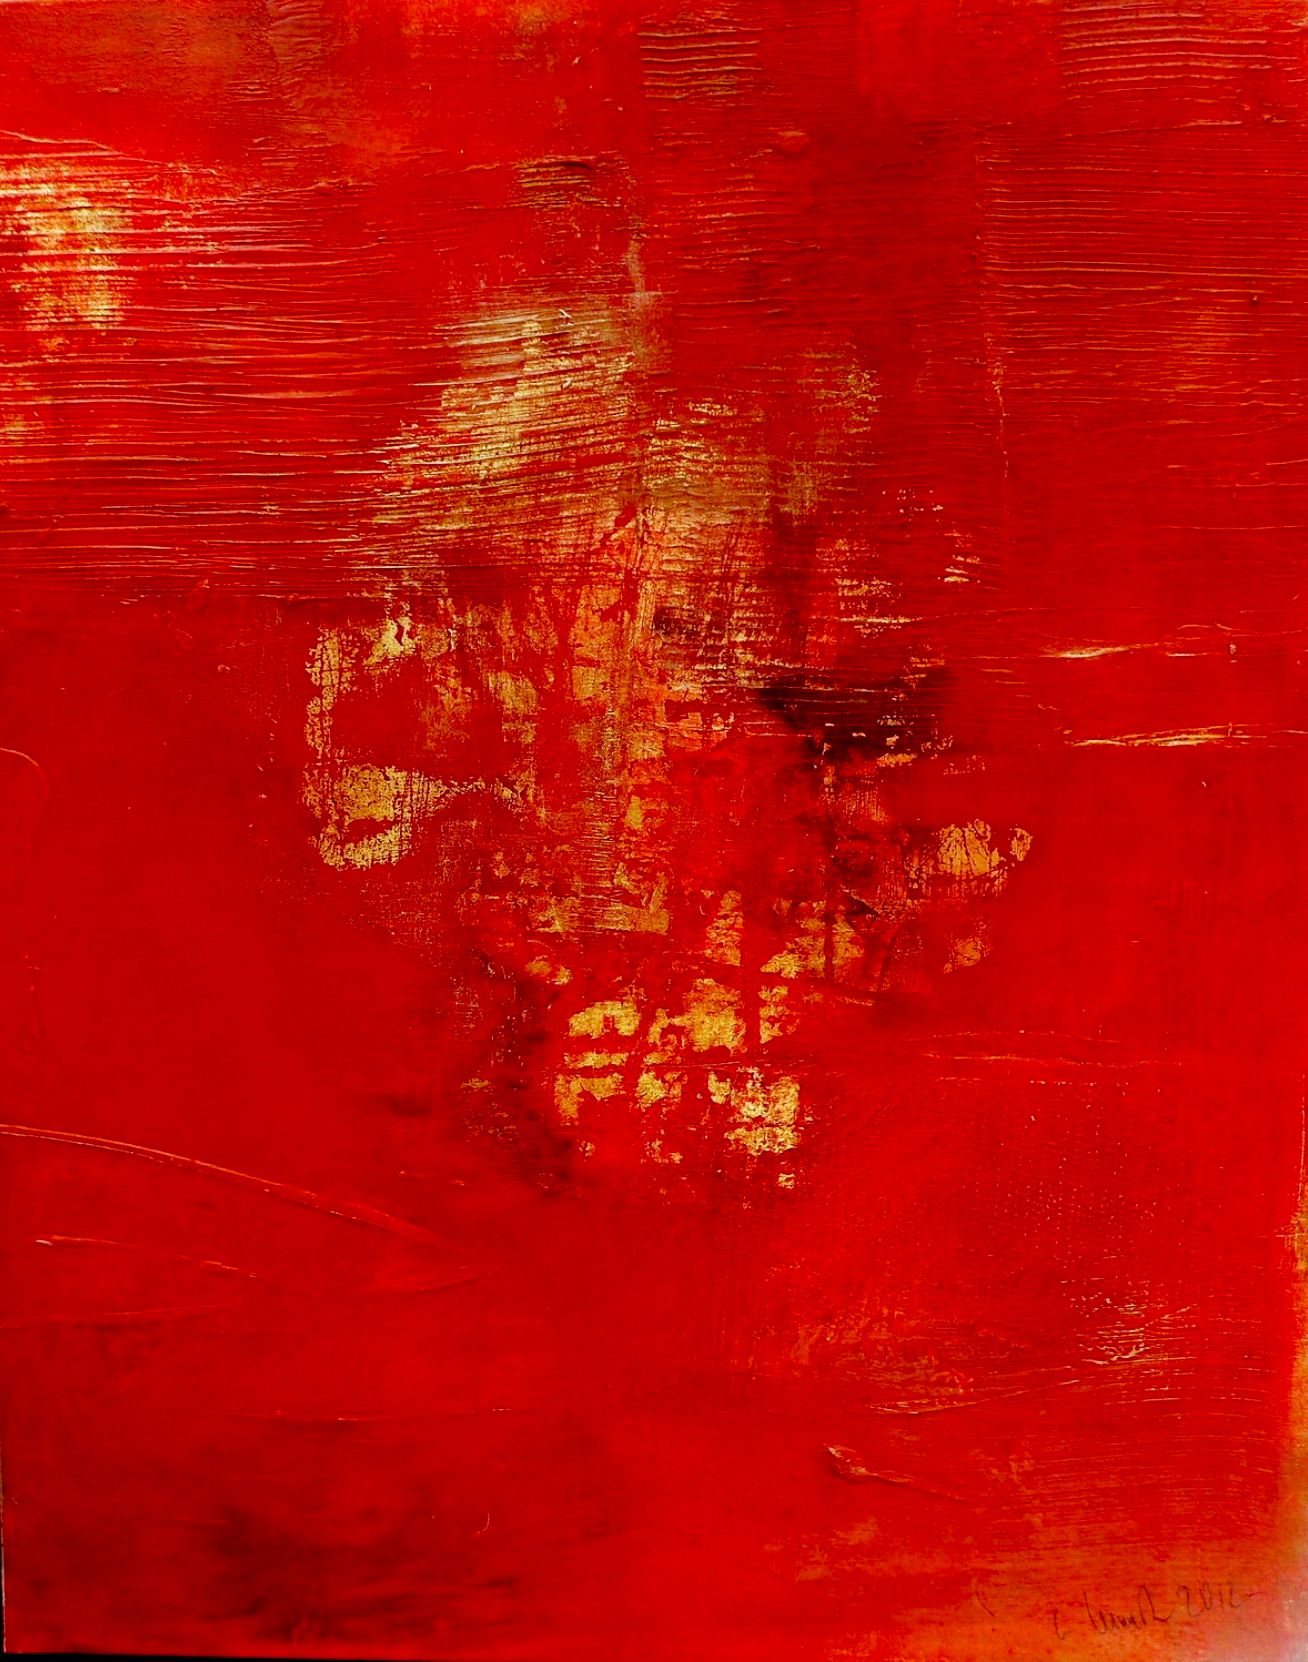 Ilusión roja 2" de Christa Haack Pintura expresionista abstracta en rojo con pan de oro auténtico sobre lienzo de algodón.